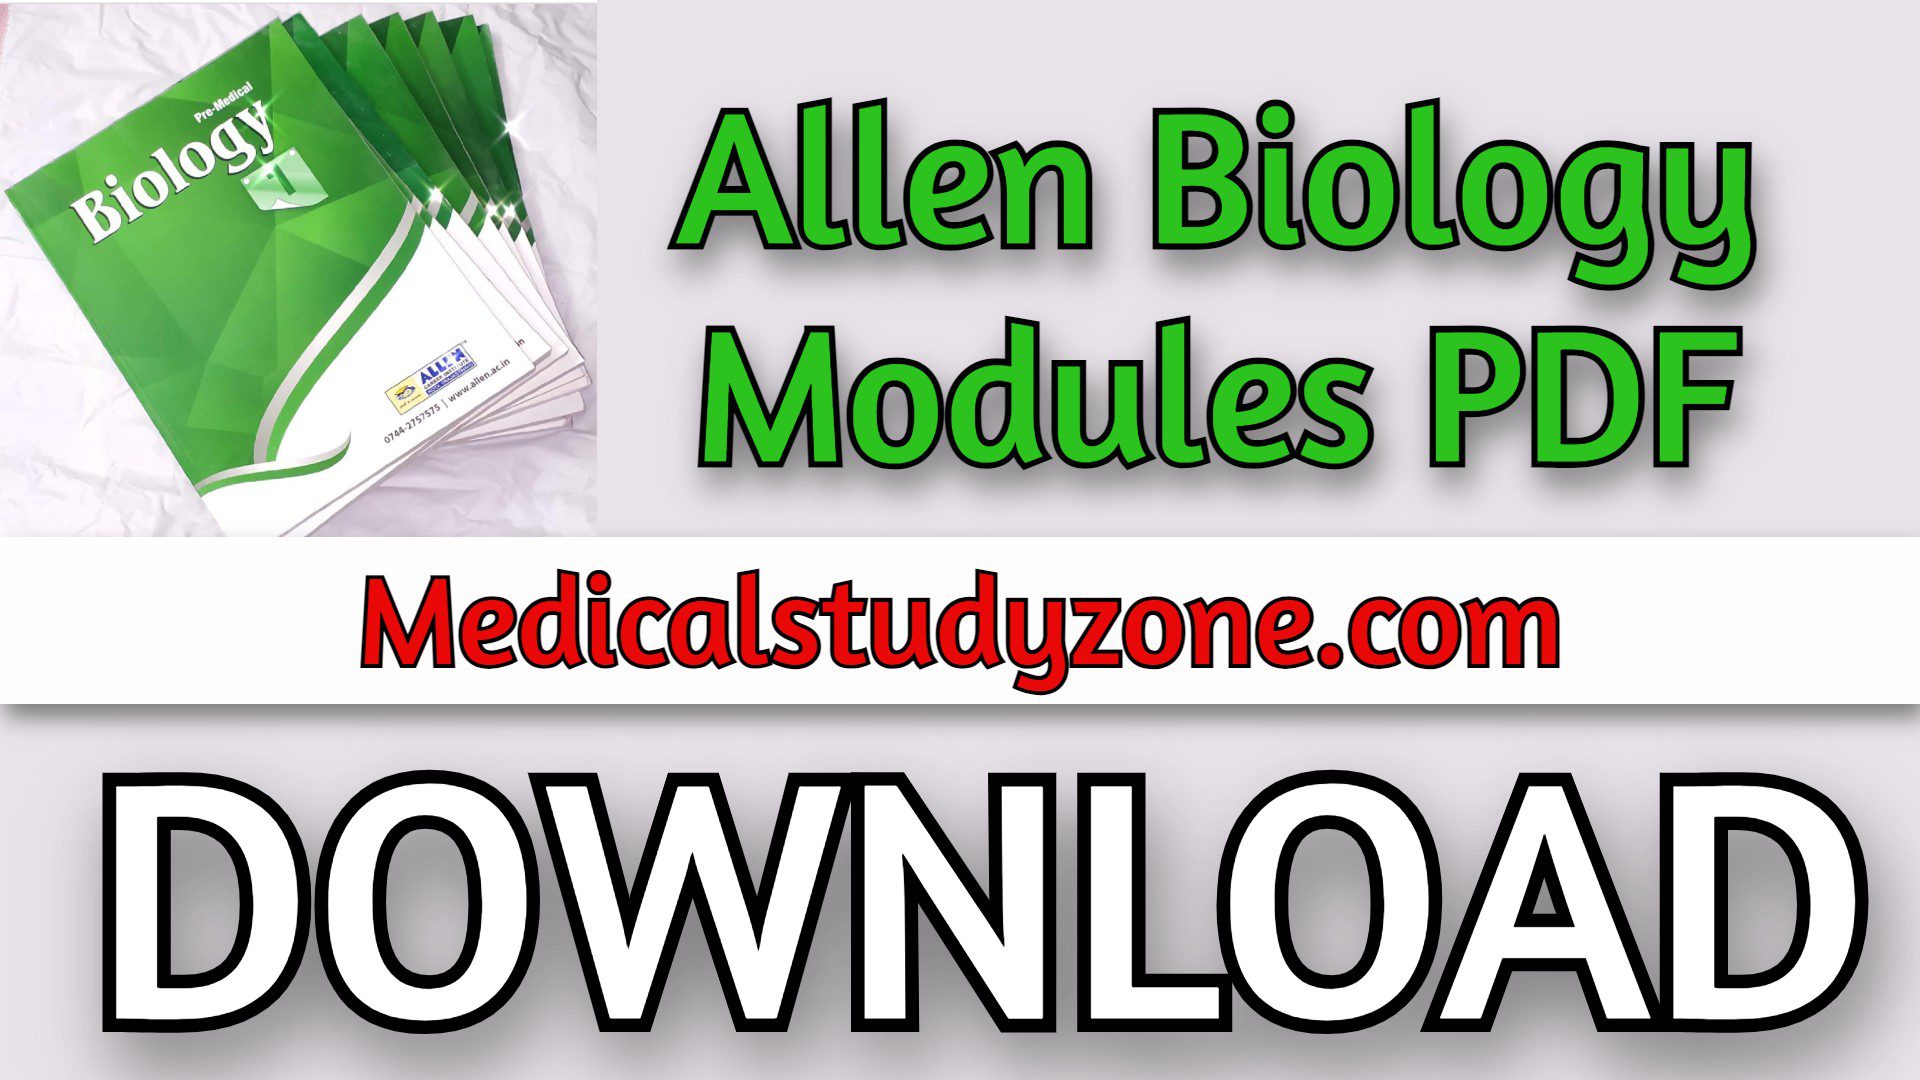 Allen Biology Modules PDF 2022 Free Download